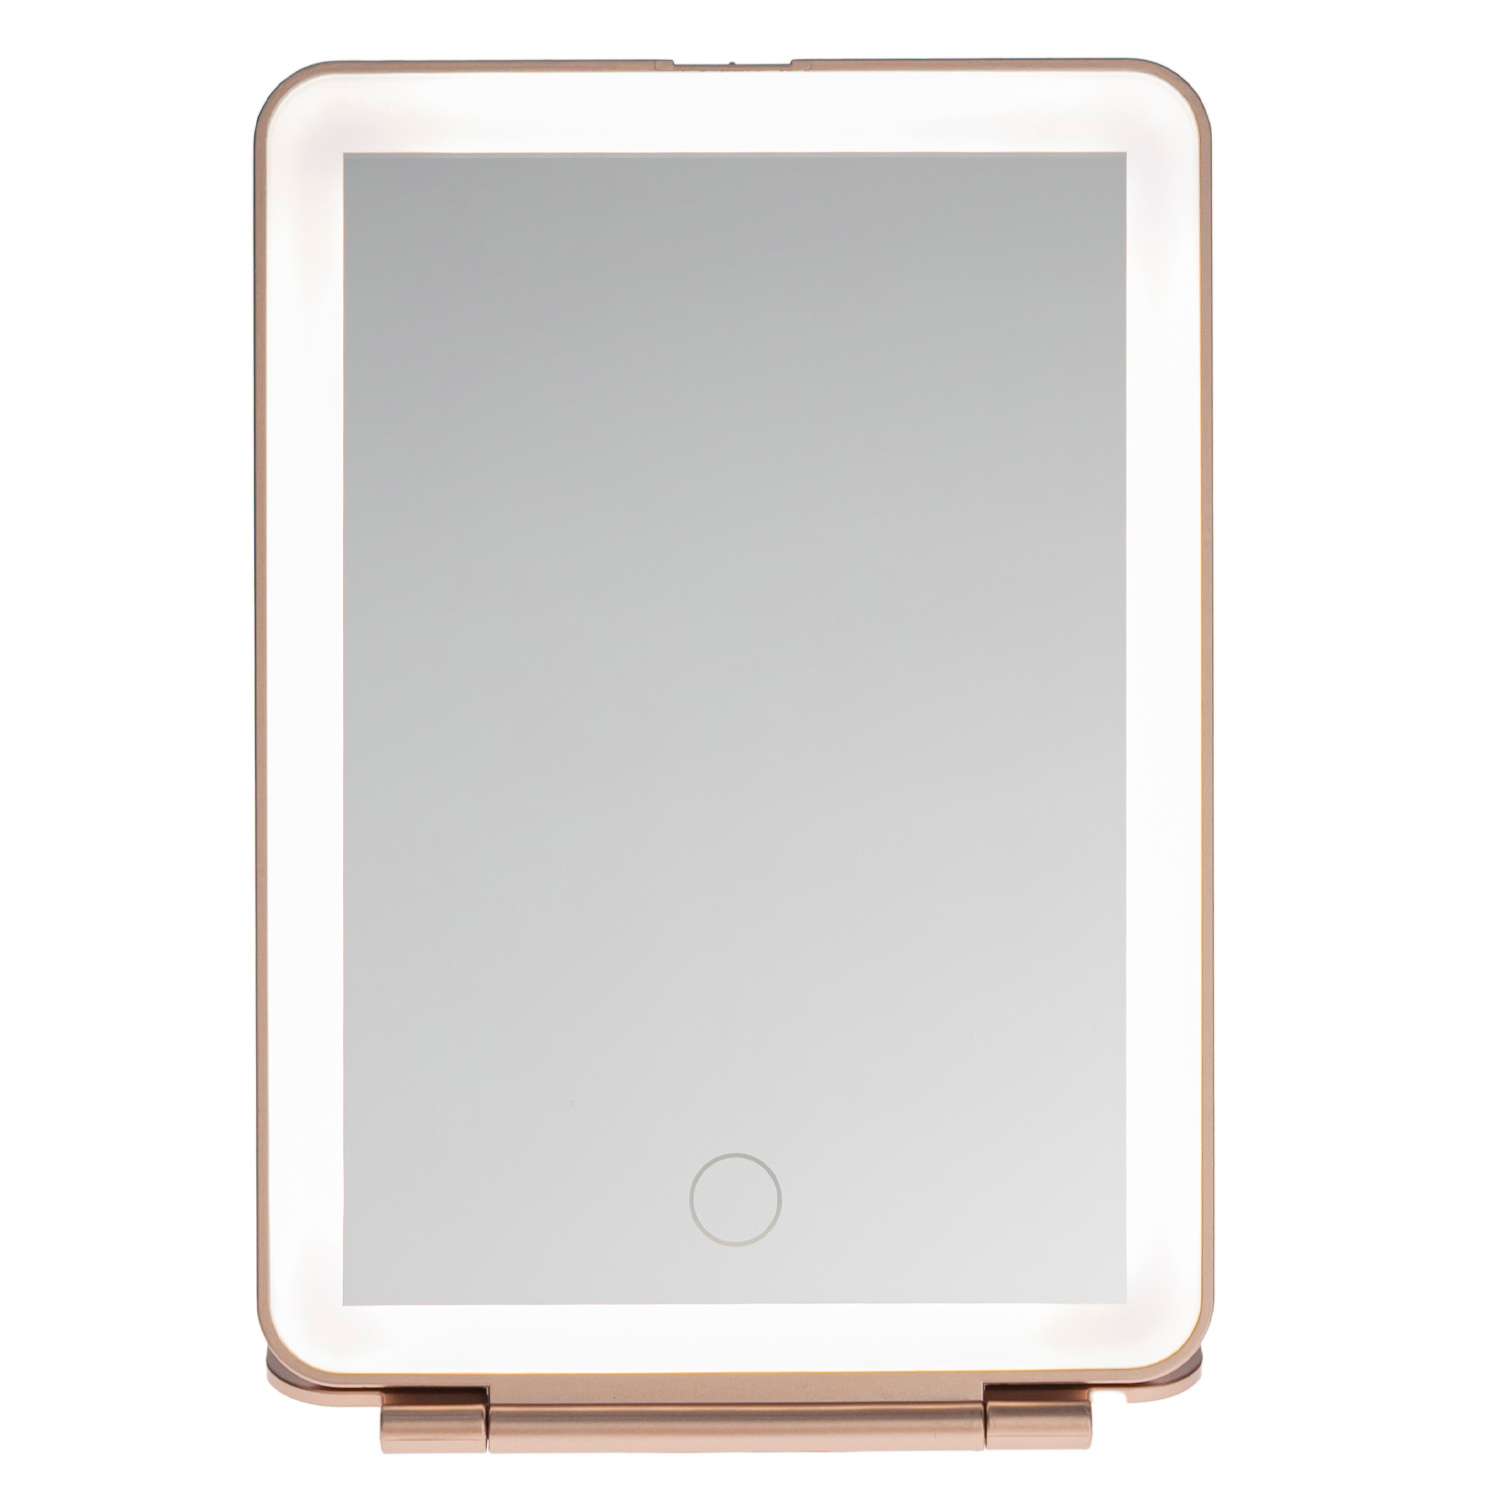 Зеркало косметическое CleverCare в форме планшета с LED подсветкой монохром цвет белый - фото 6